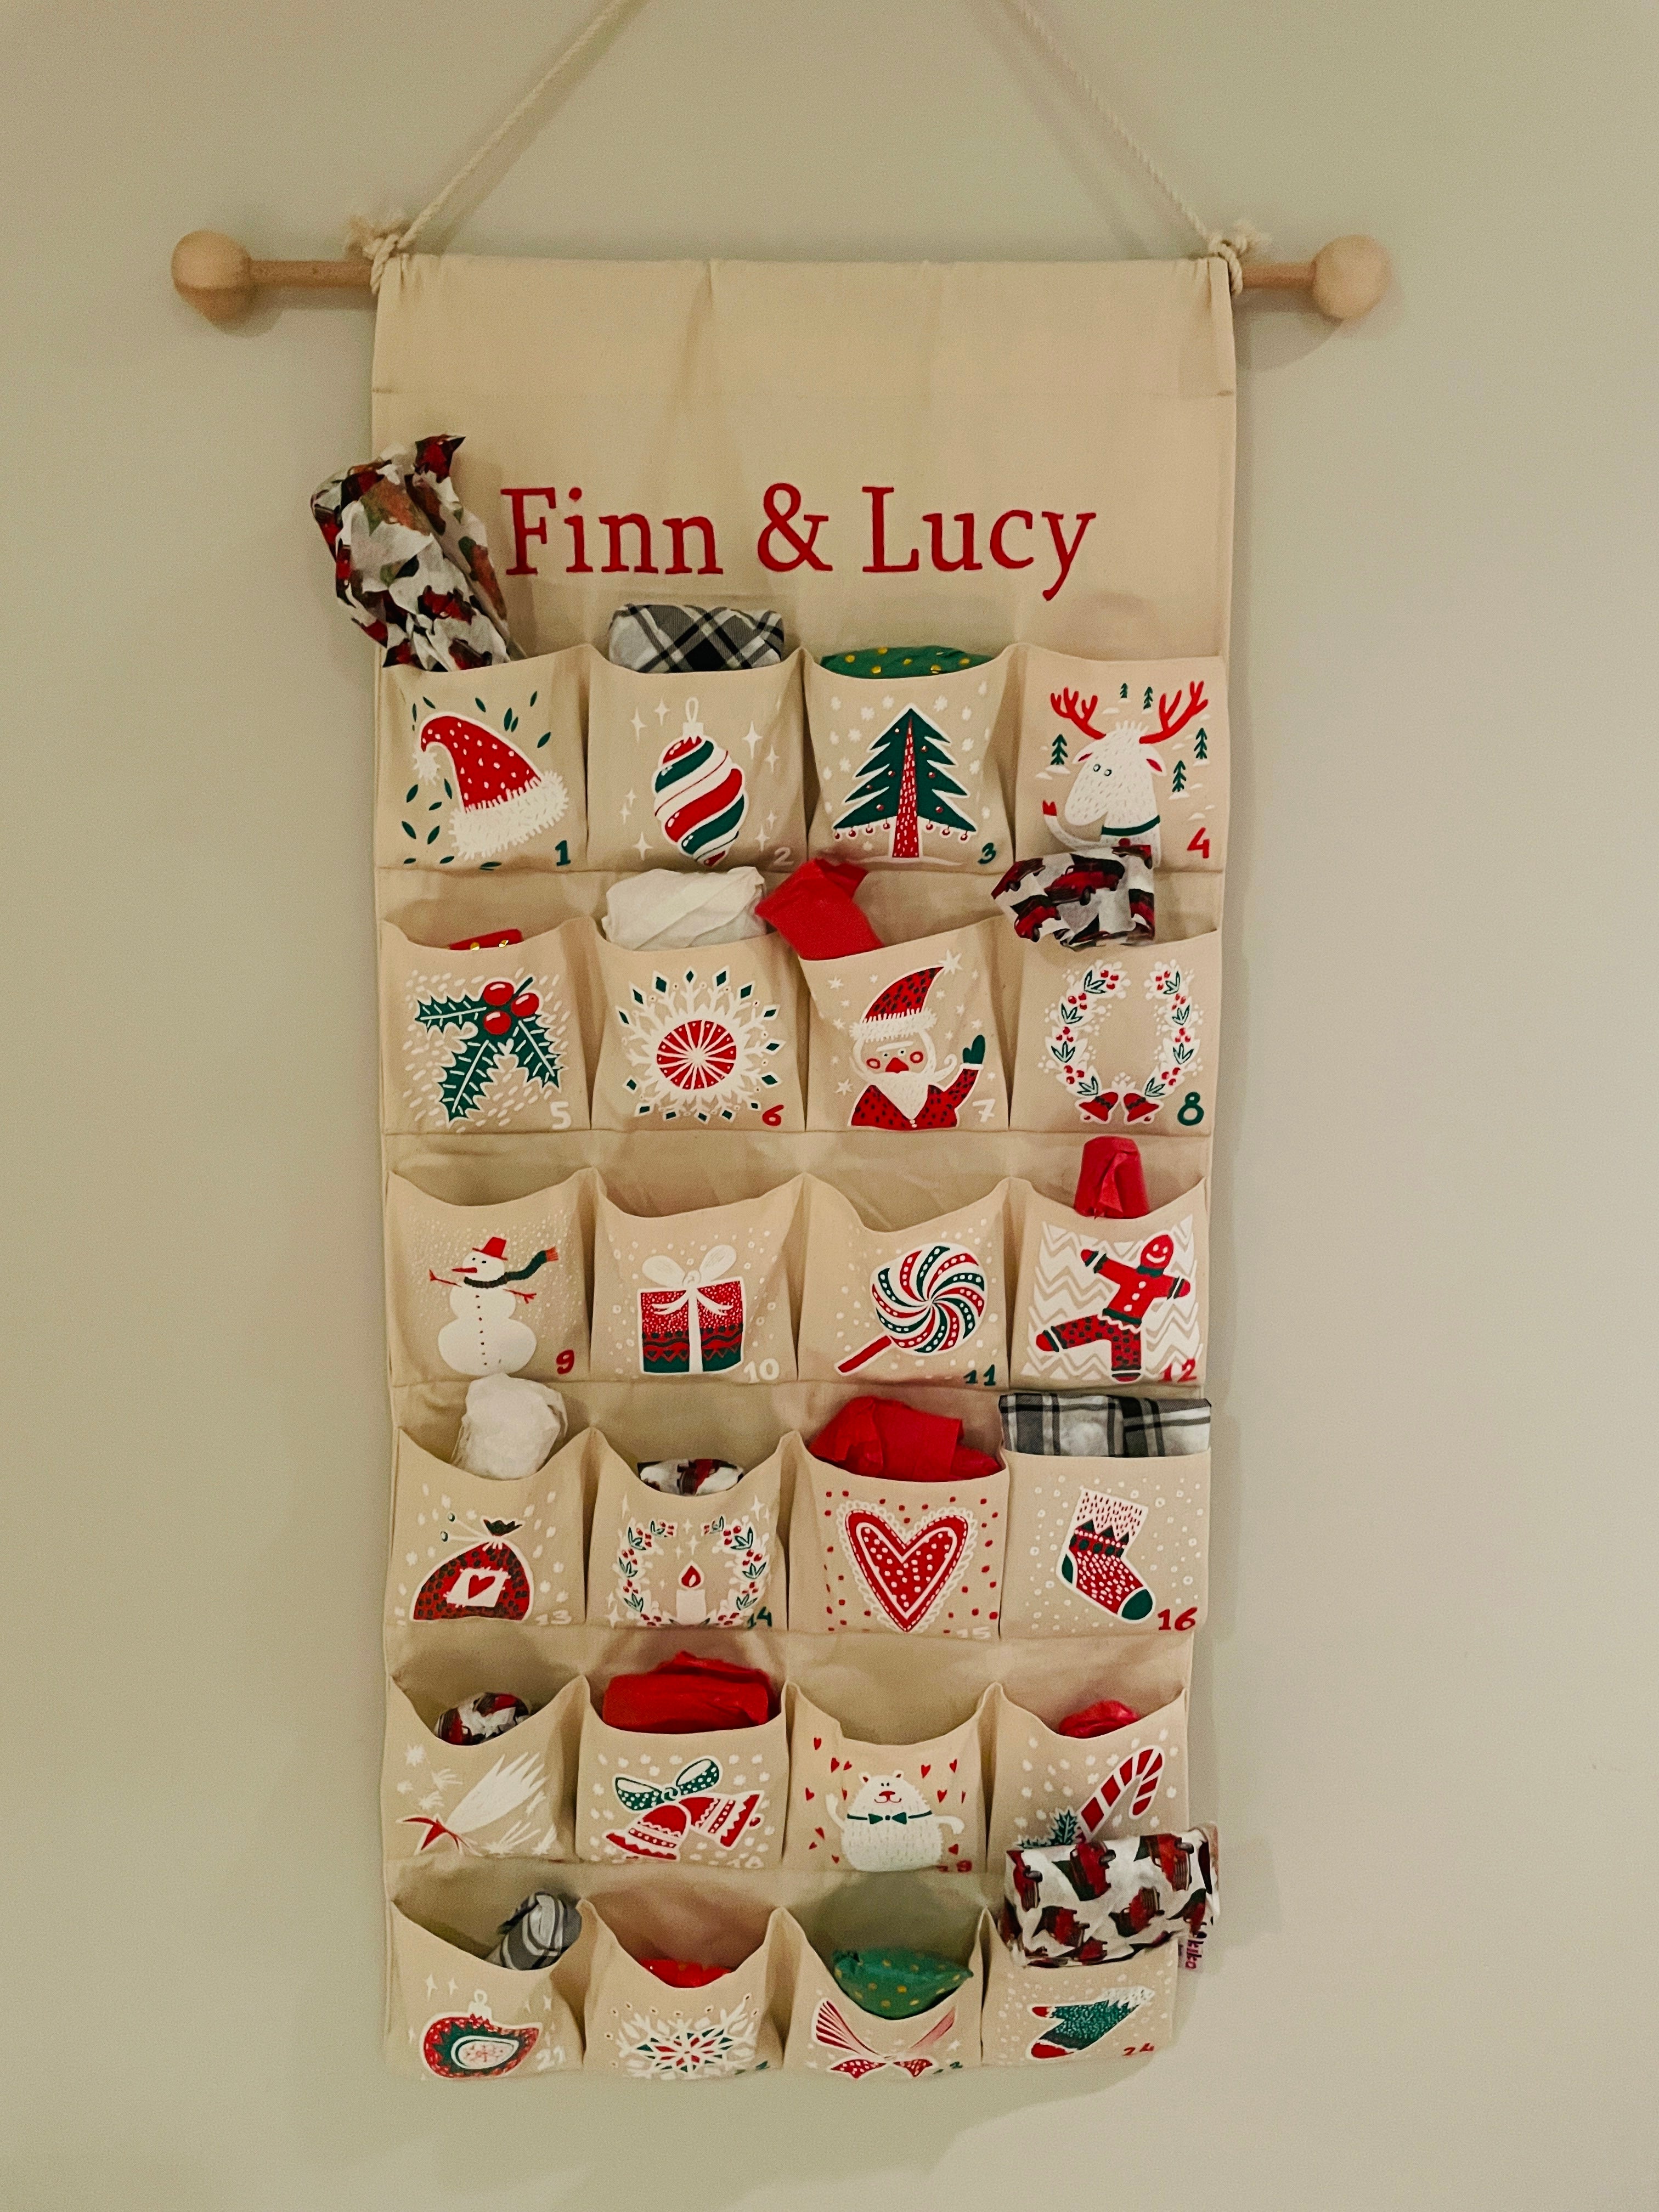 A handmade advent calendar features the names "Finn & Lucy"